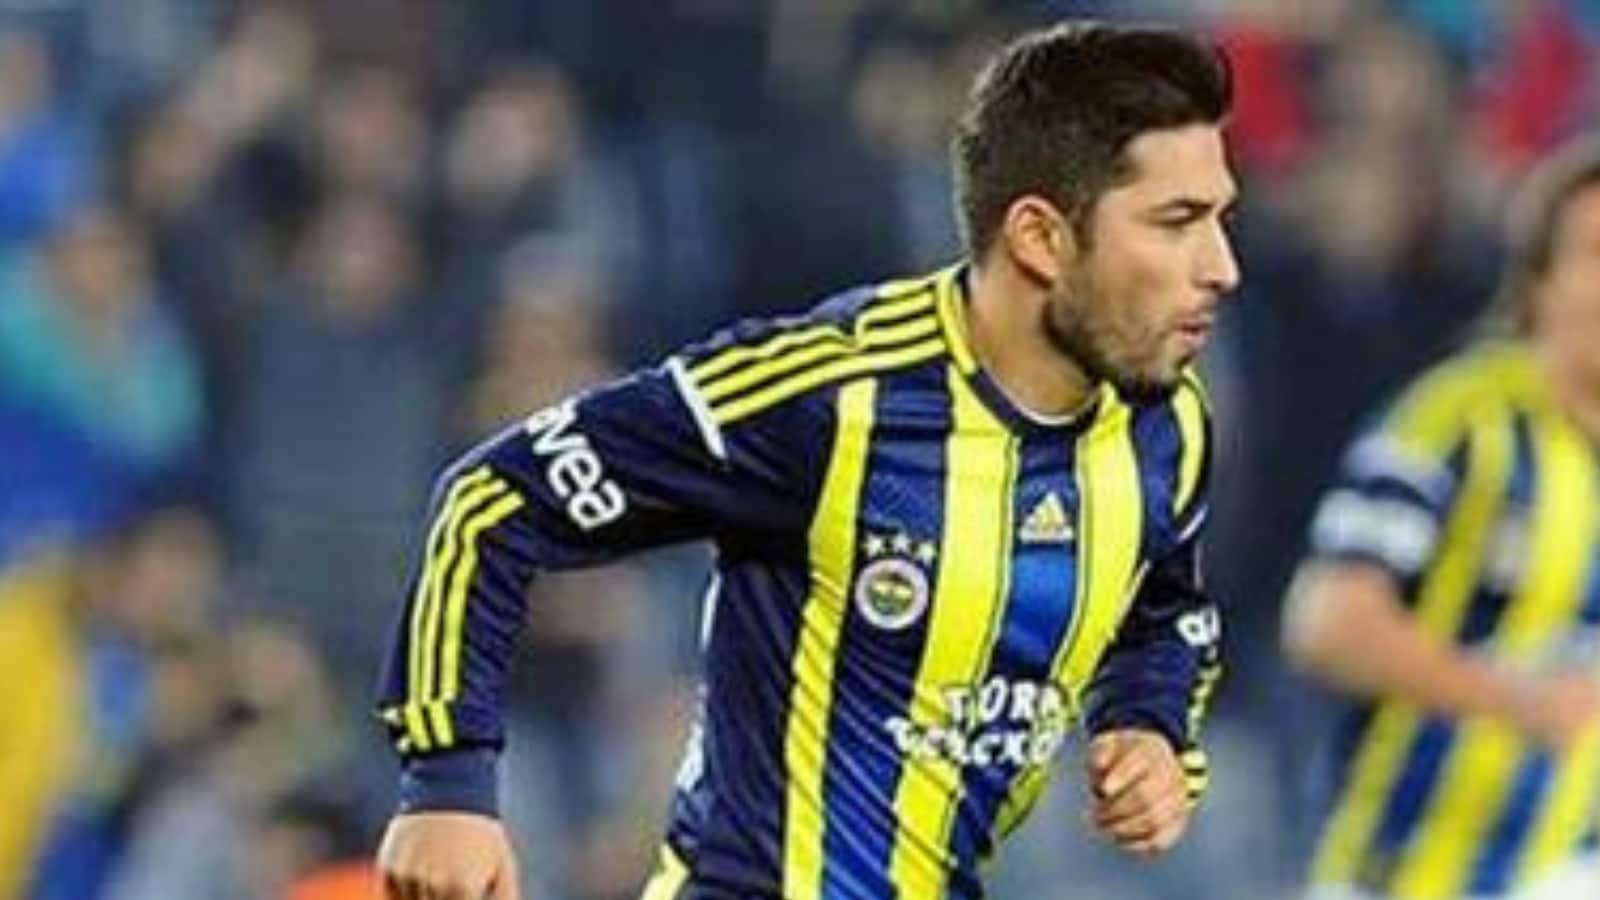 Former Super Lig Footballer Sezer Ozturk Connected to Fatal Shooting, Says Report